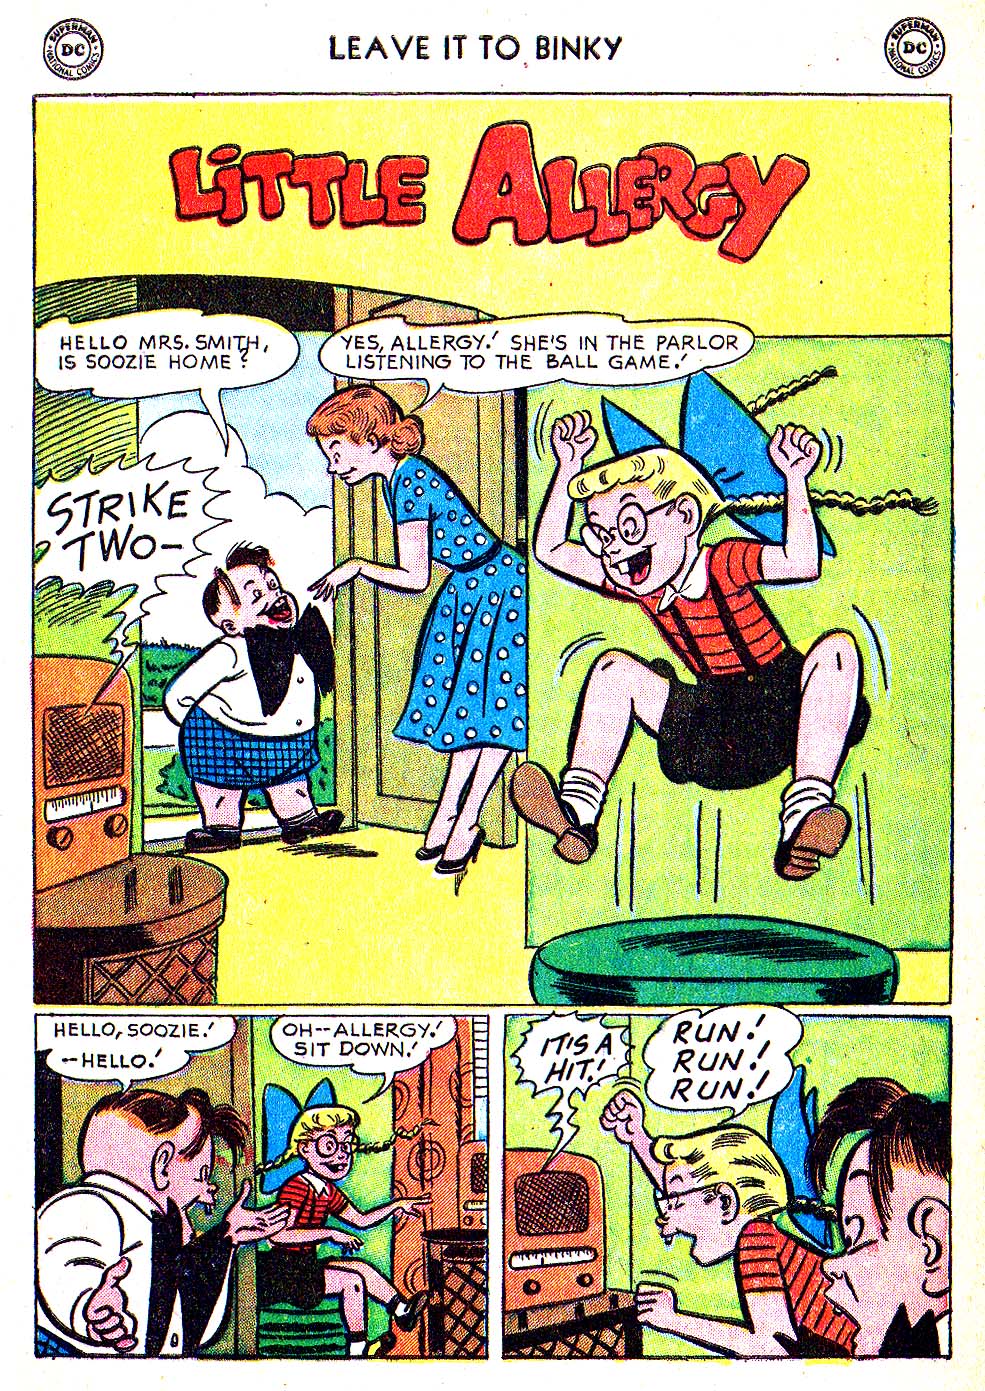 Read online Leave it to Binky comic -  Issue #27 - 11